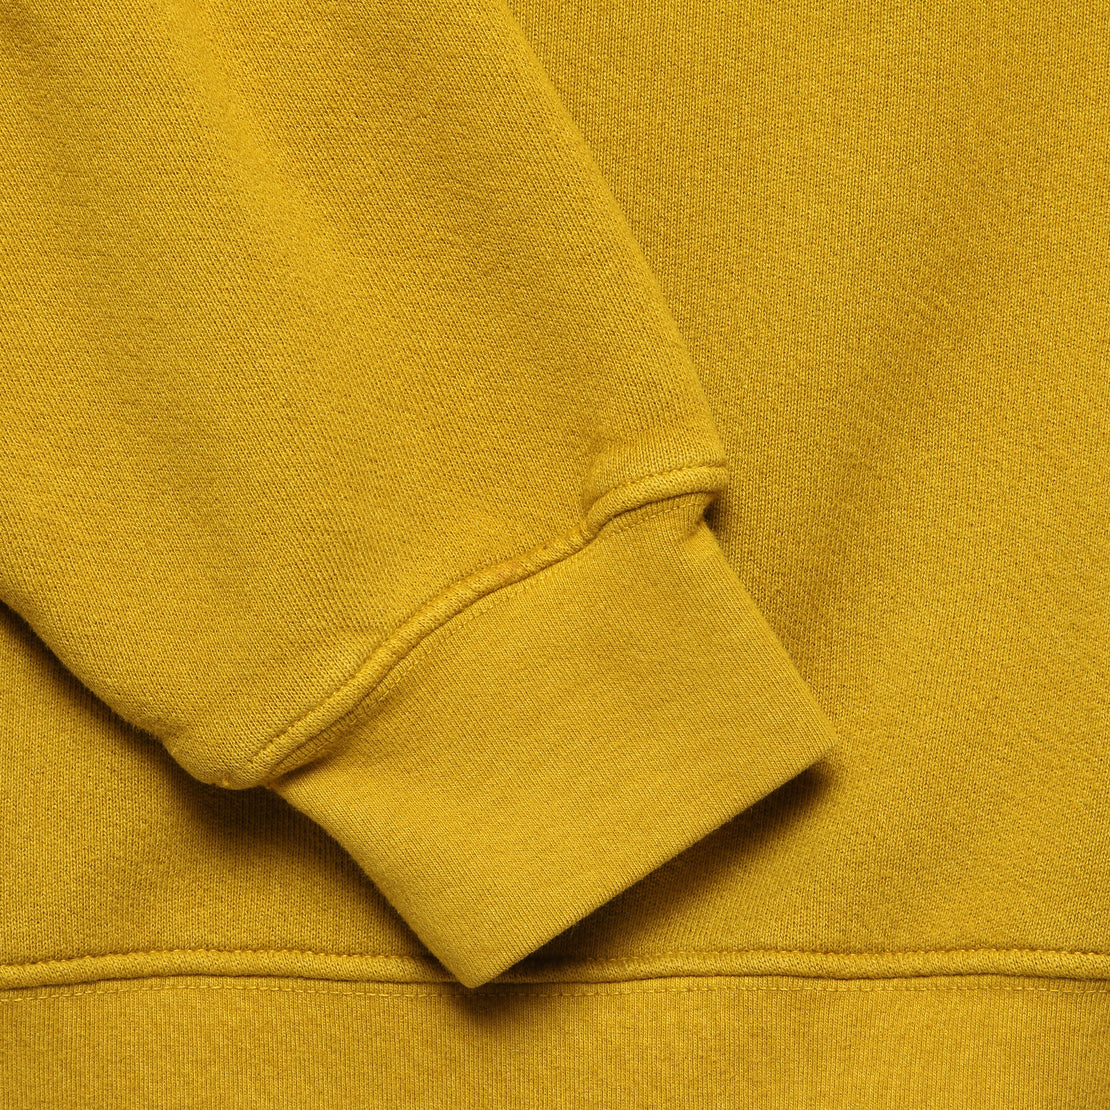 Super Russell Turtleneck - Mustard - Monitaly - STAG Provisions - Tops - Fleece / Sweatshirt